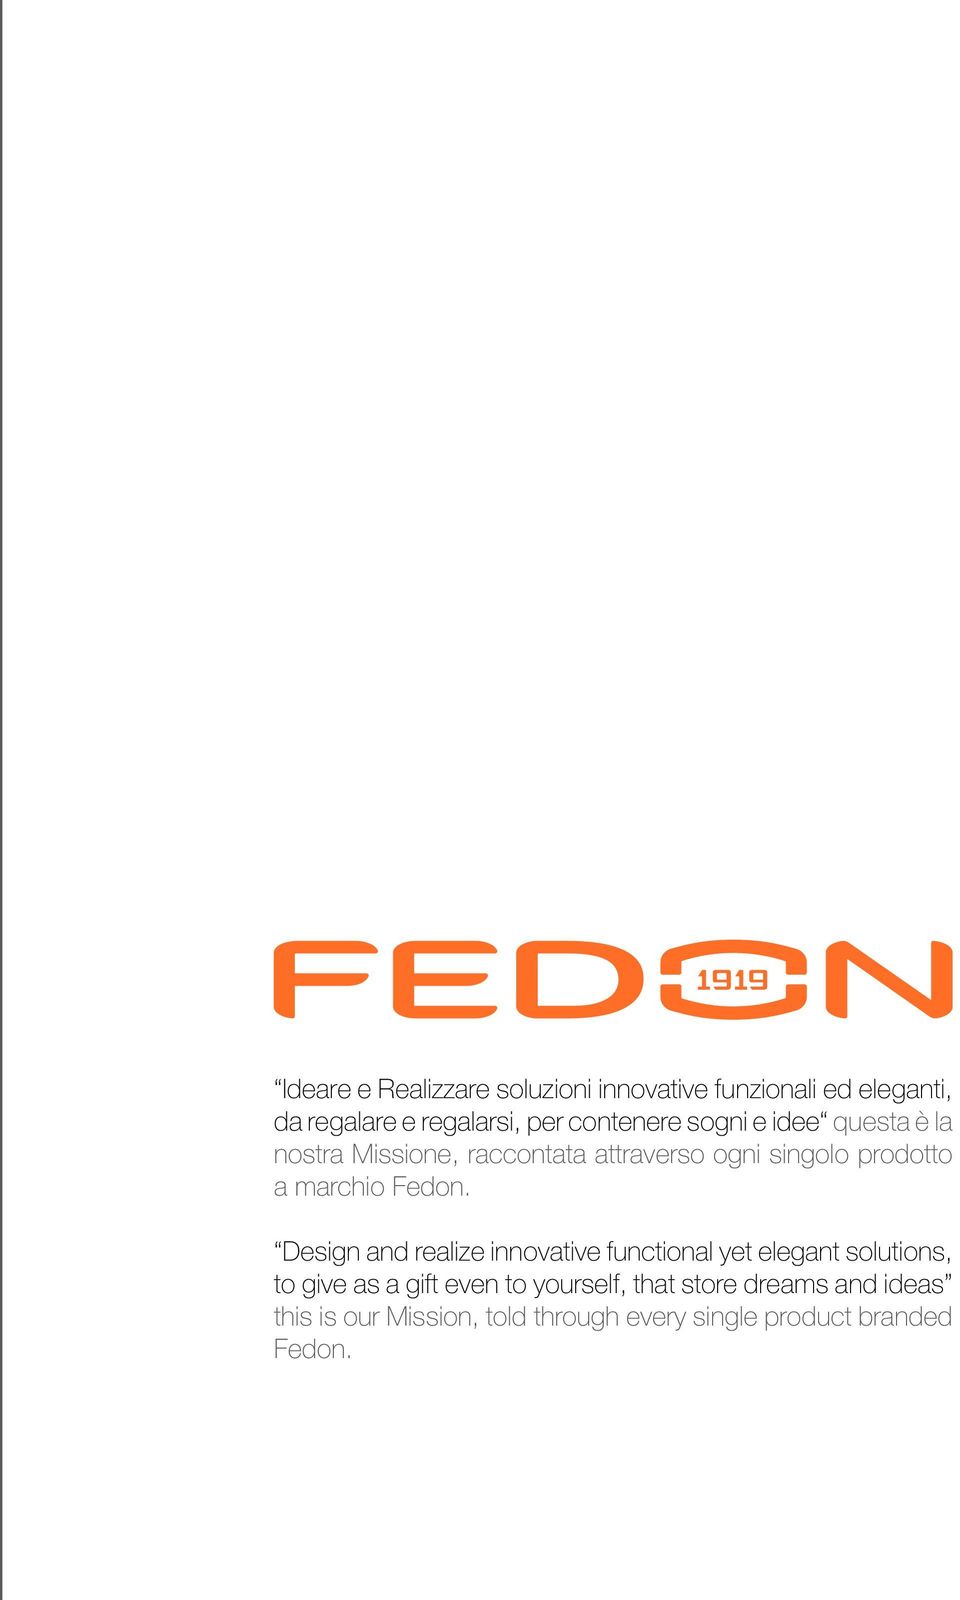 marchio Fedon.